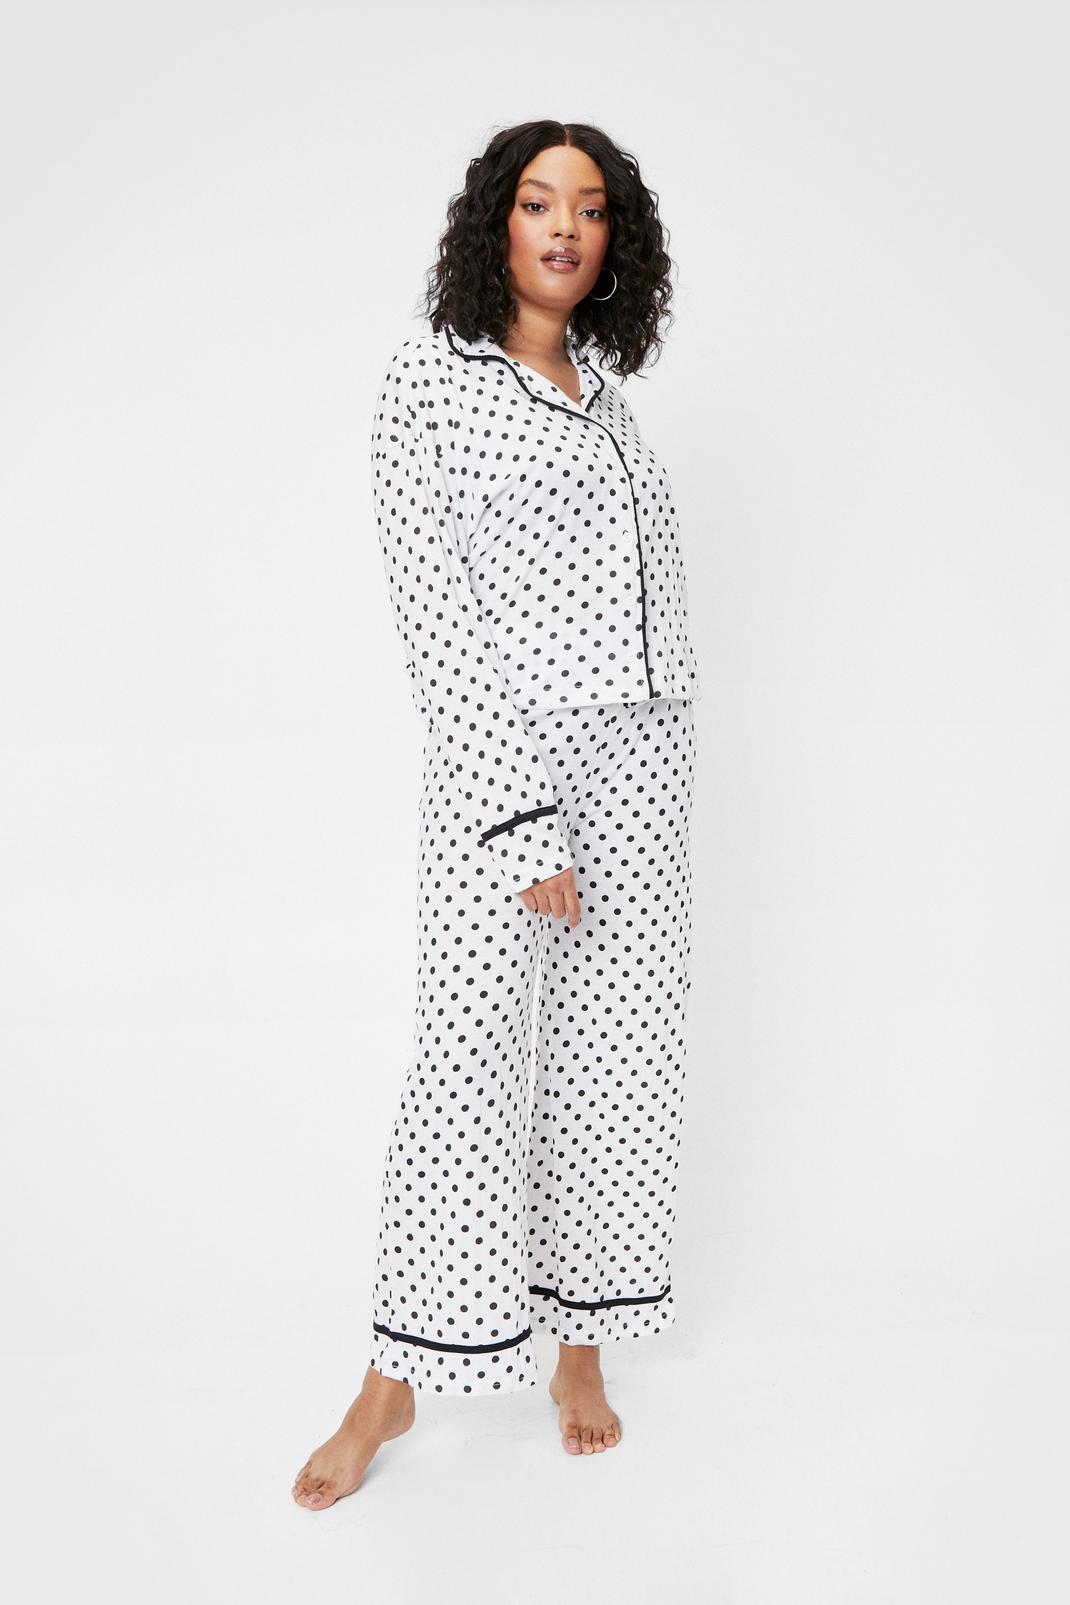 Black Plus Size Polka Dot Pants Pajama Set image number 1